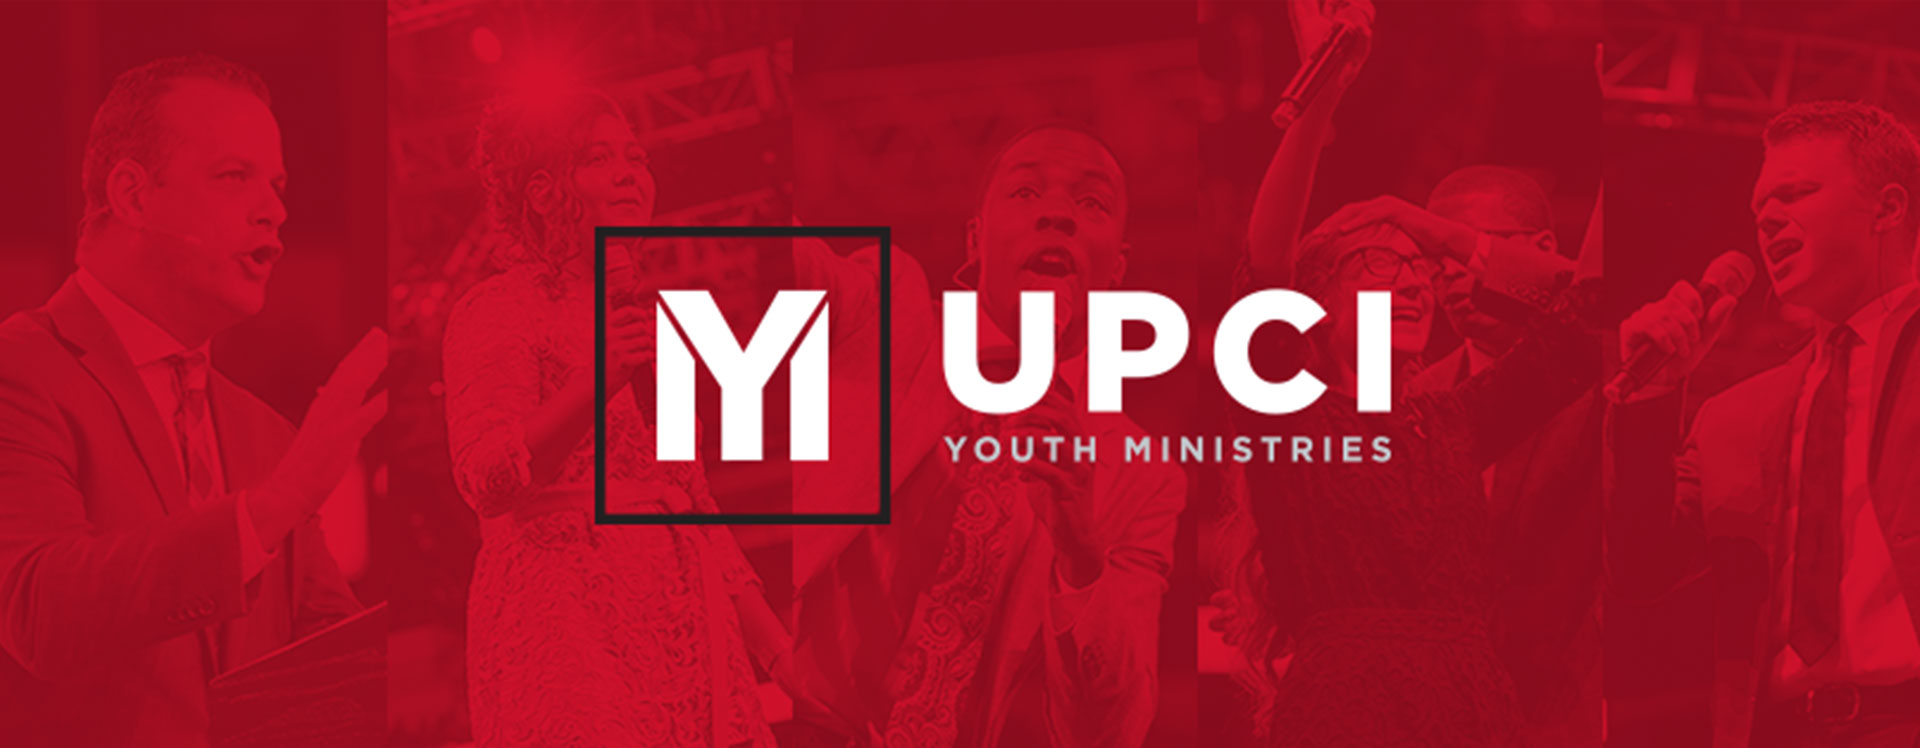 Upci Youth Ministries | United Pentecostal Church International